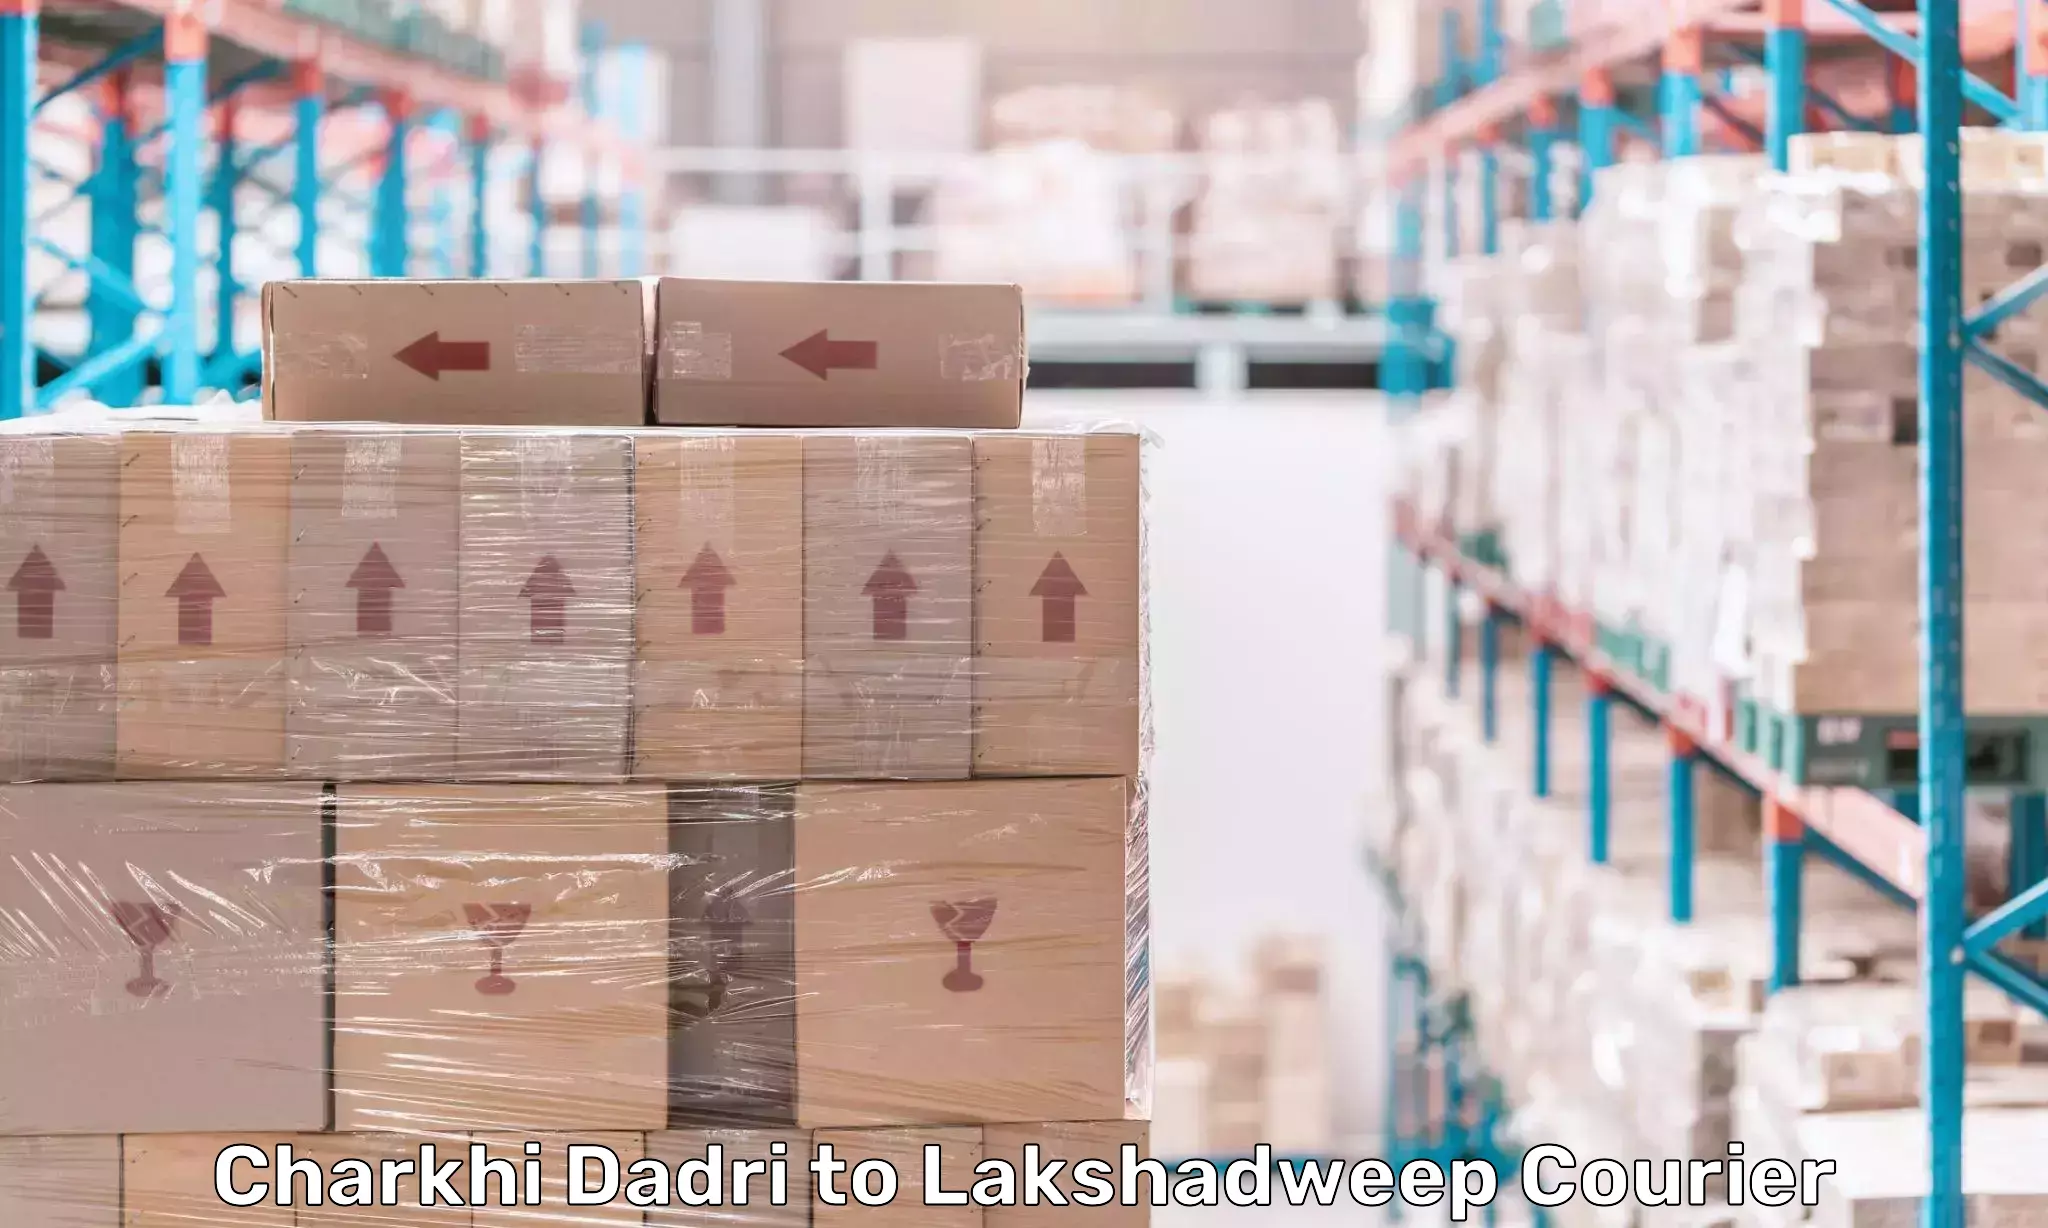 Global logistics network Charkhi Dadri to Lakshadweep